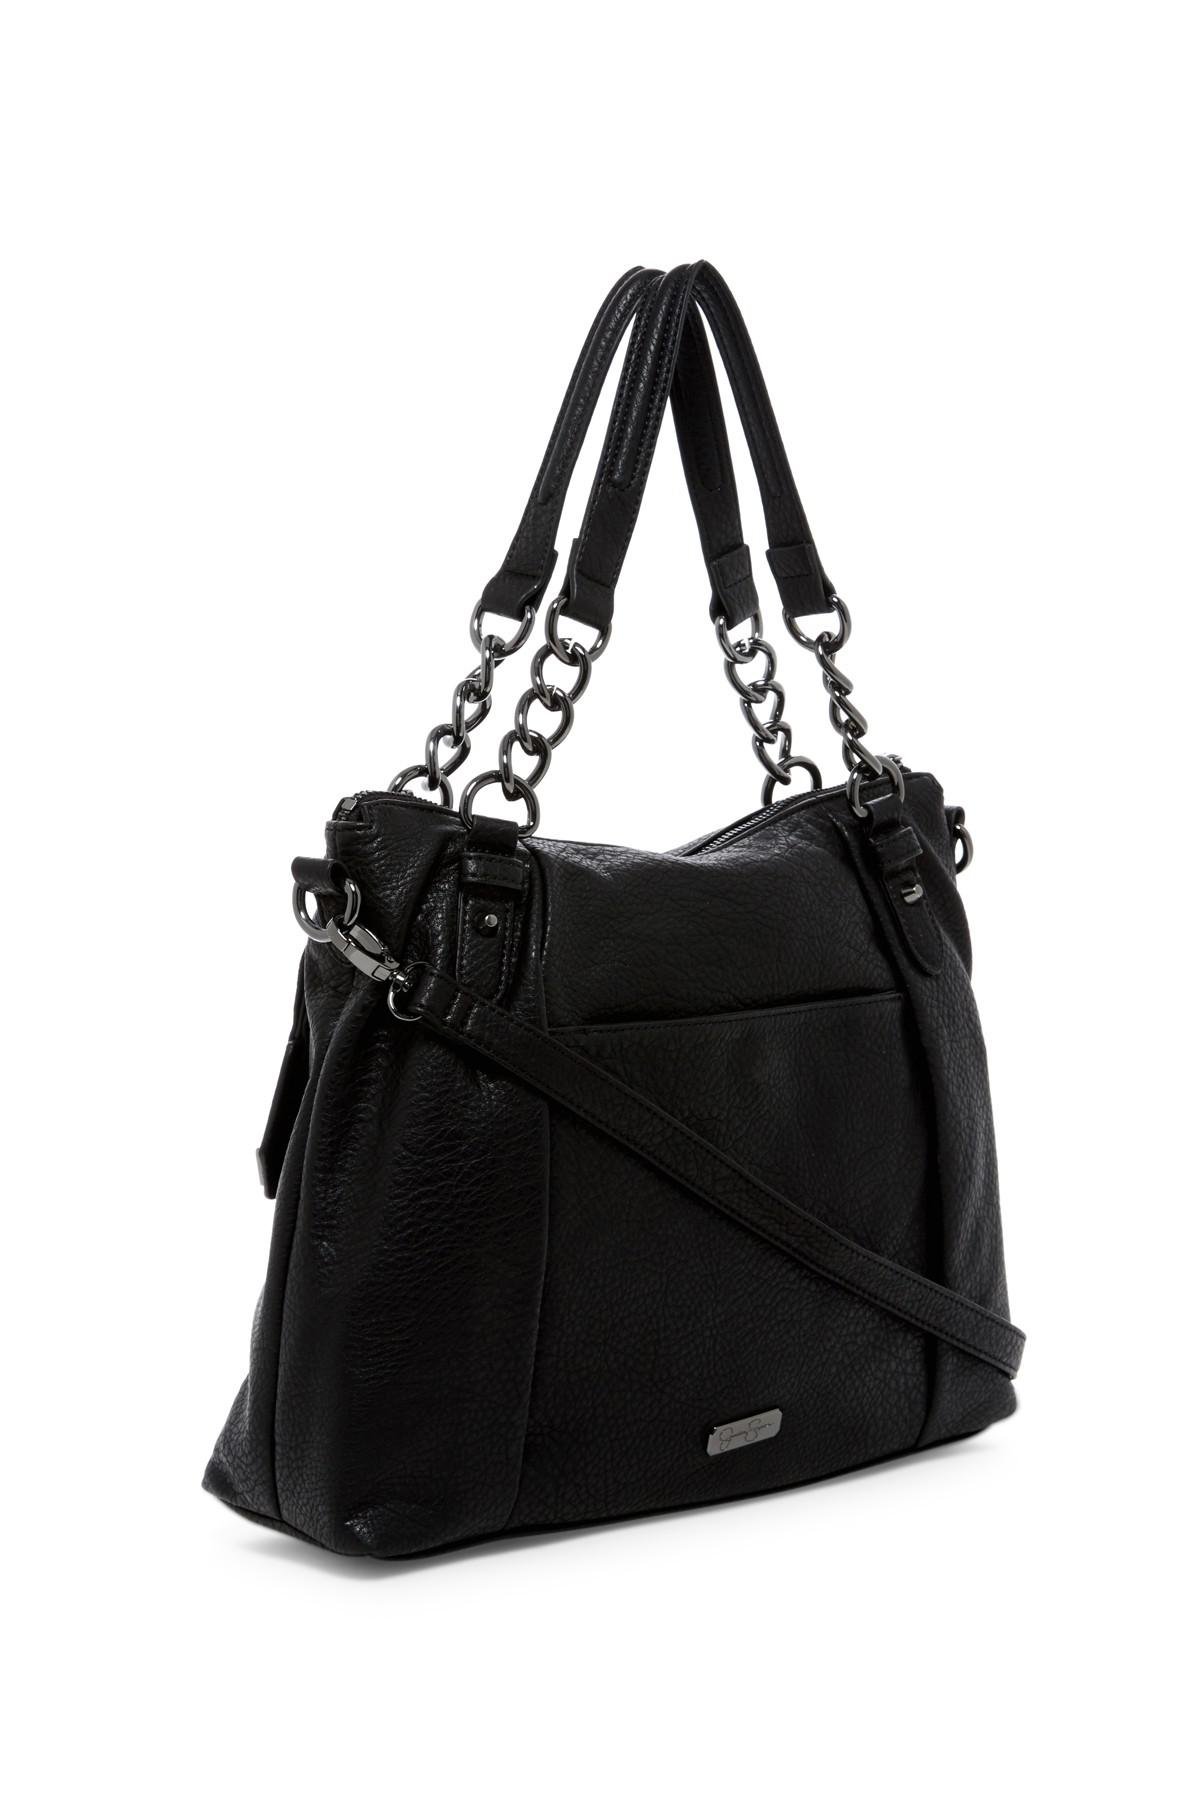 Jessica Simpson Black Vegan Leather Ruffle Bow Handbag Satchel Purse | eBay